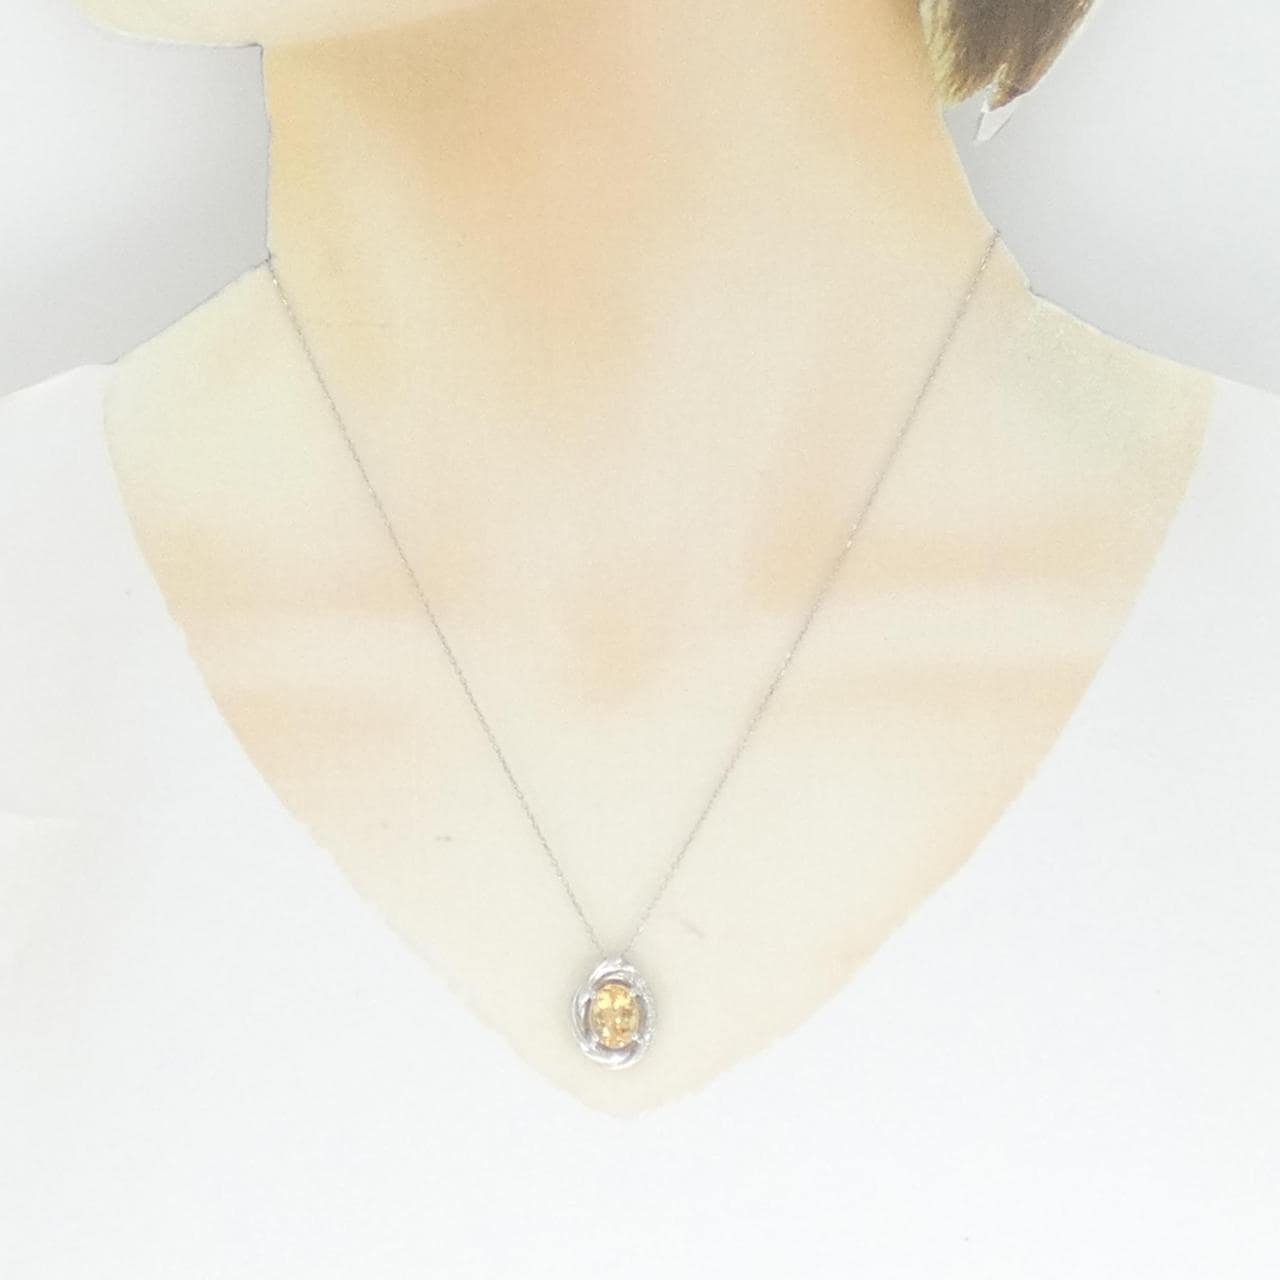 K18WG imperial Topaz necklace 2.06CT